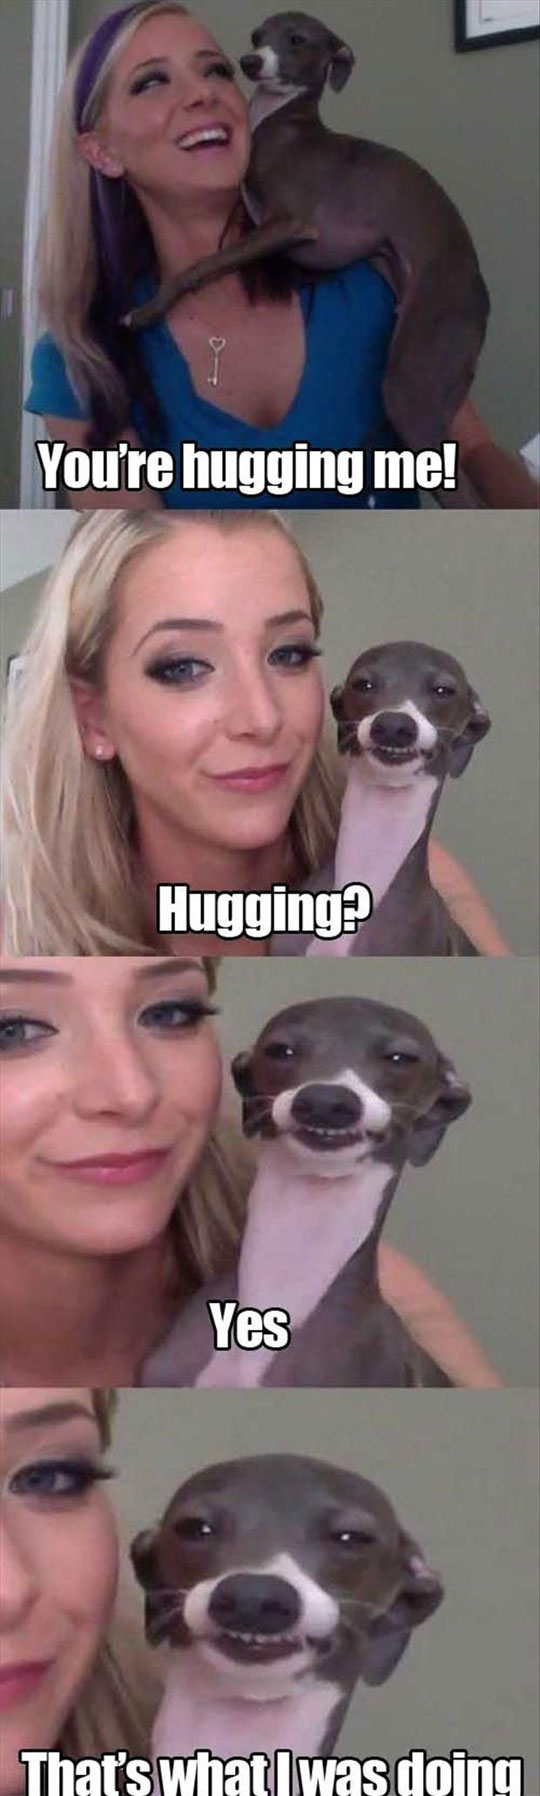 You're hugging me!